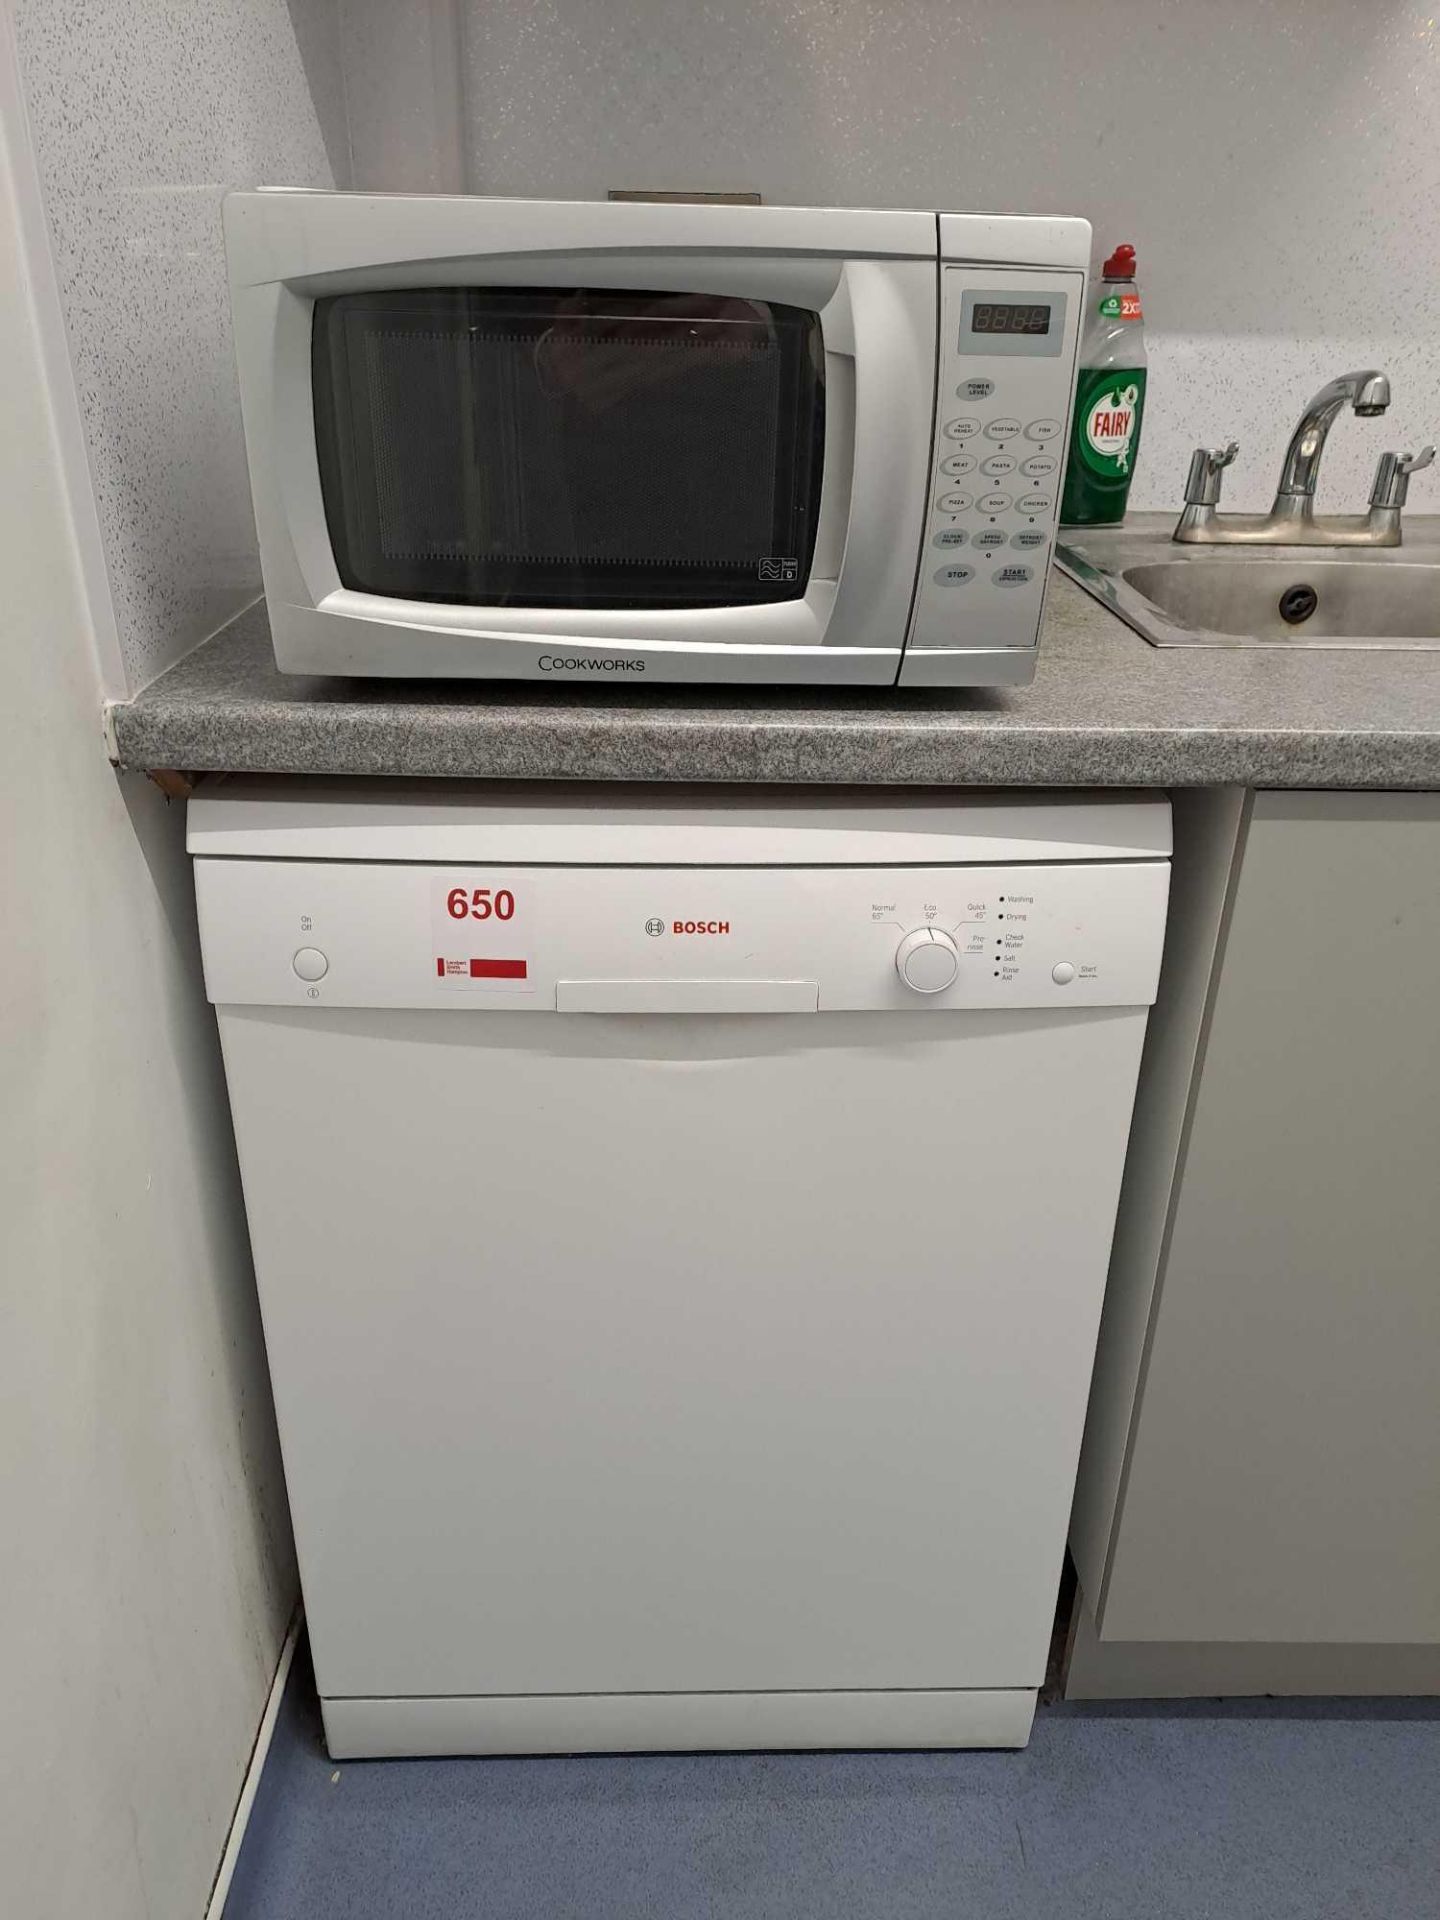 Bosch dishwasher, model SMS40T42UK-34 and Cookworks microwave